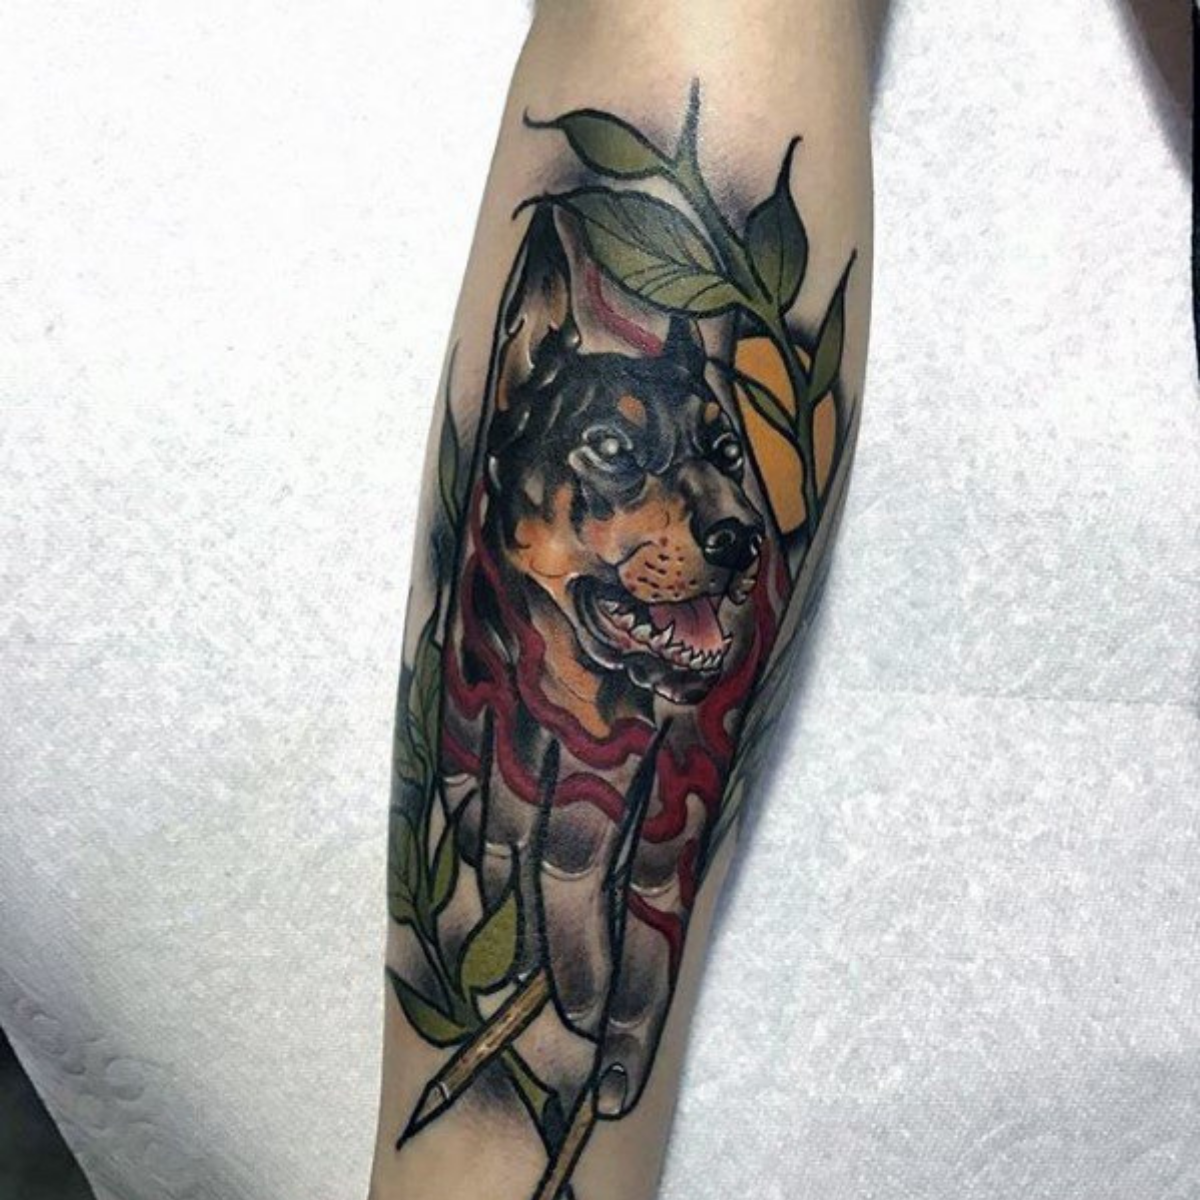 The Doberman Gang tattoo on the thigh